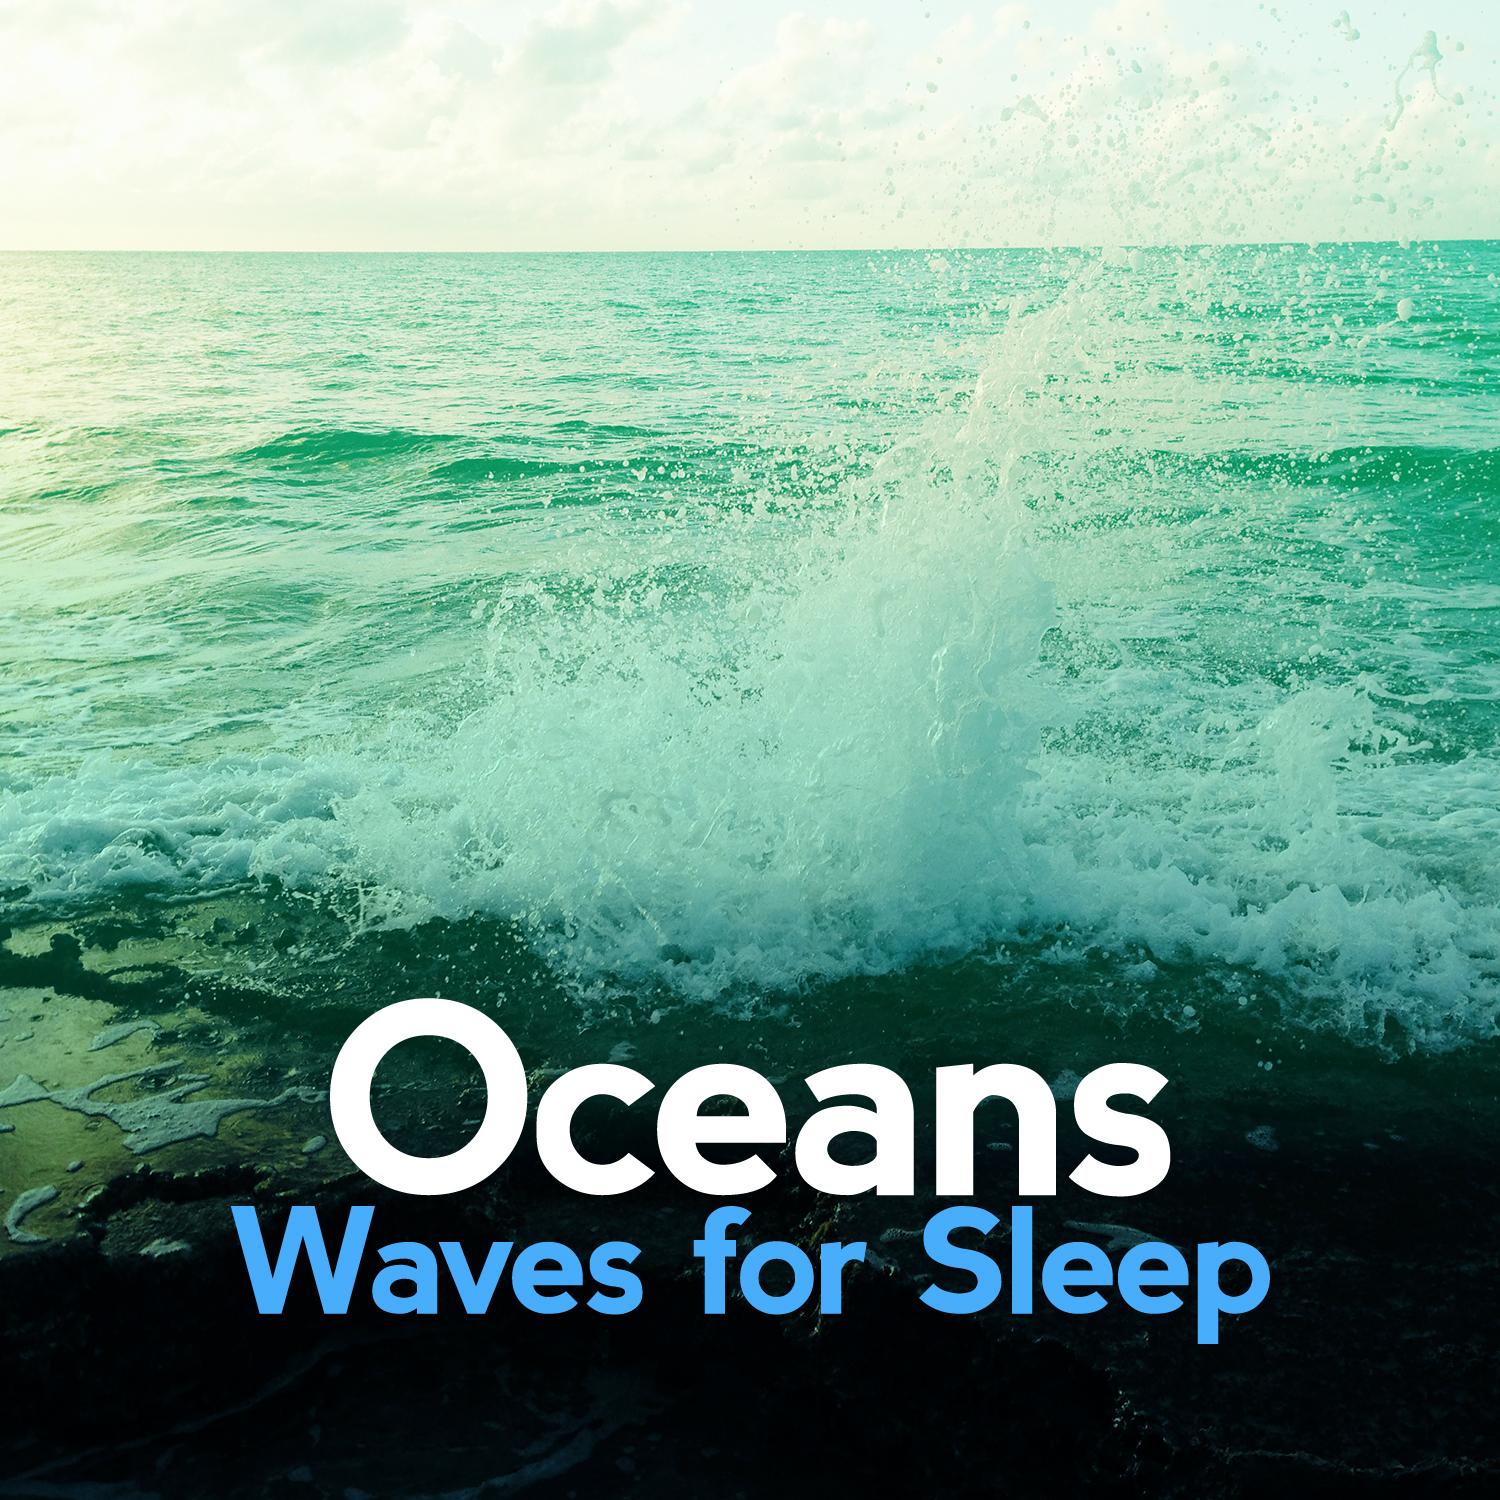 Oceans Waves for Sleep